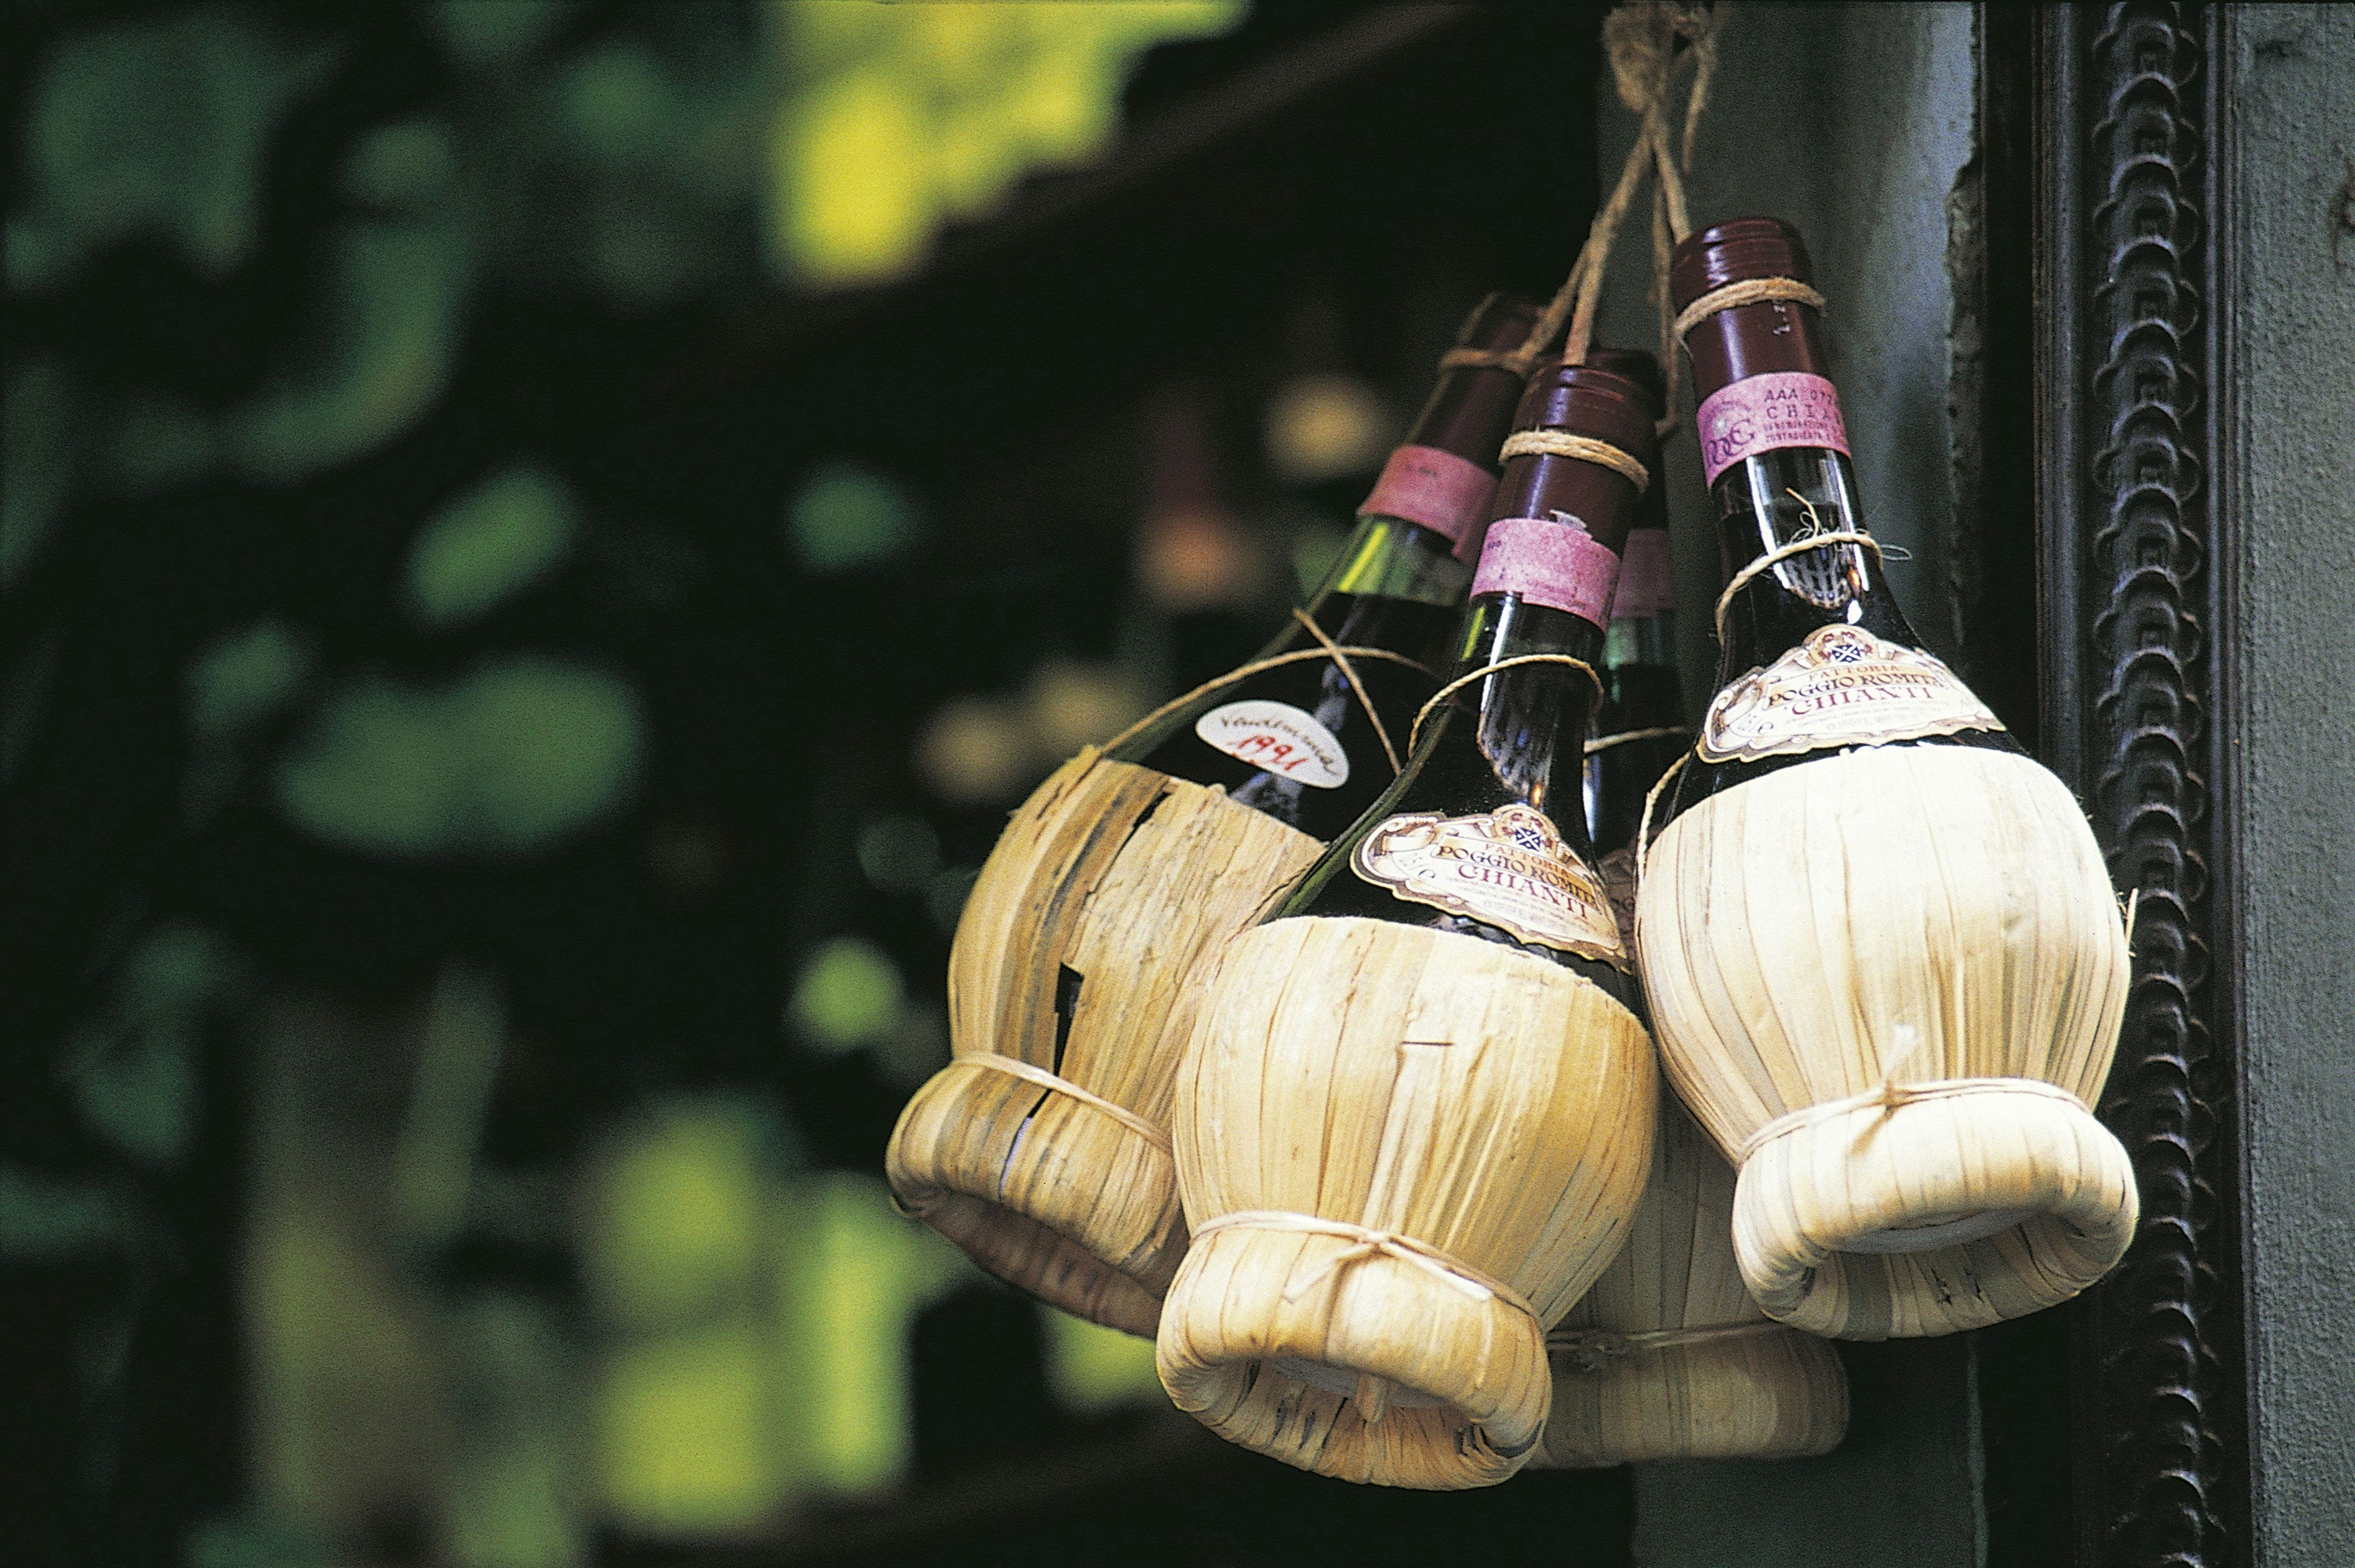 Bottles of Chianti wine in Italy